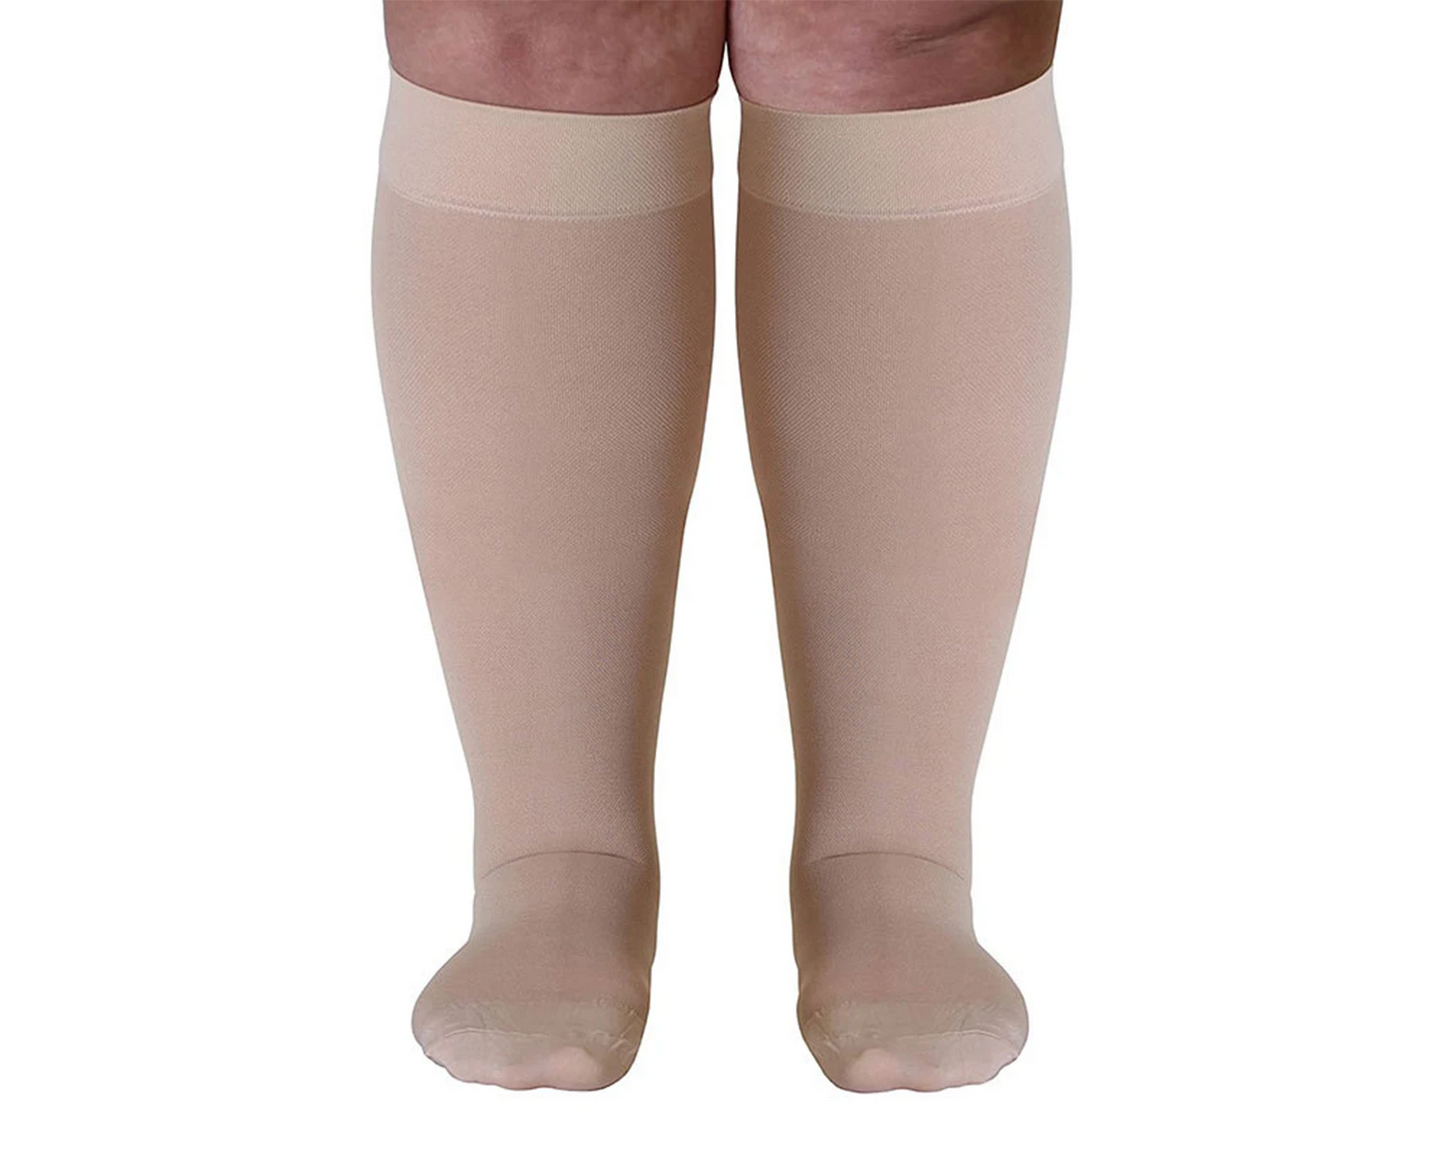 Knee High Compression Socks - Stockings